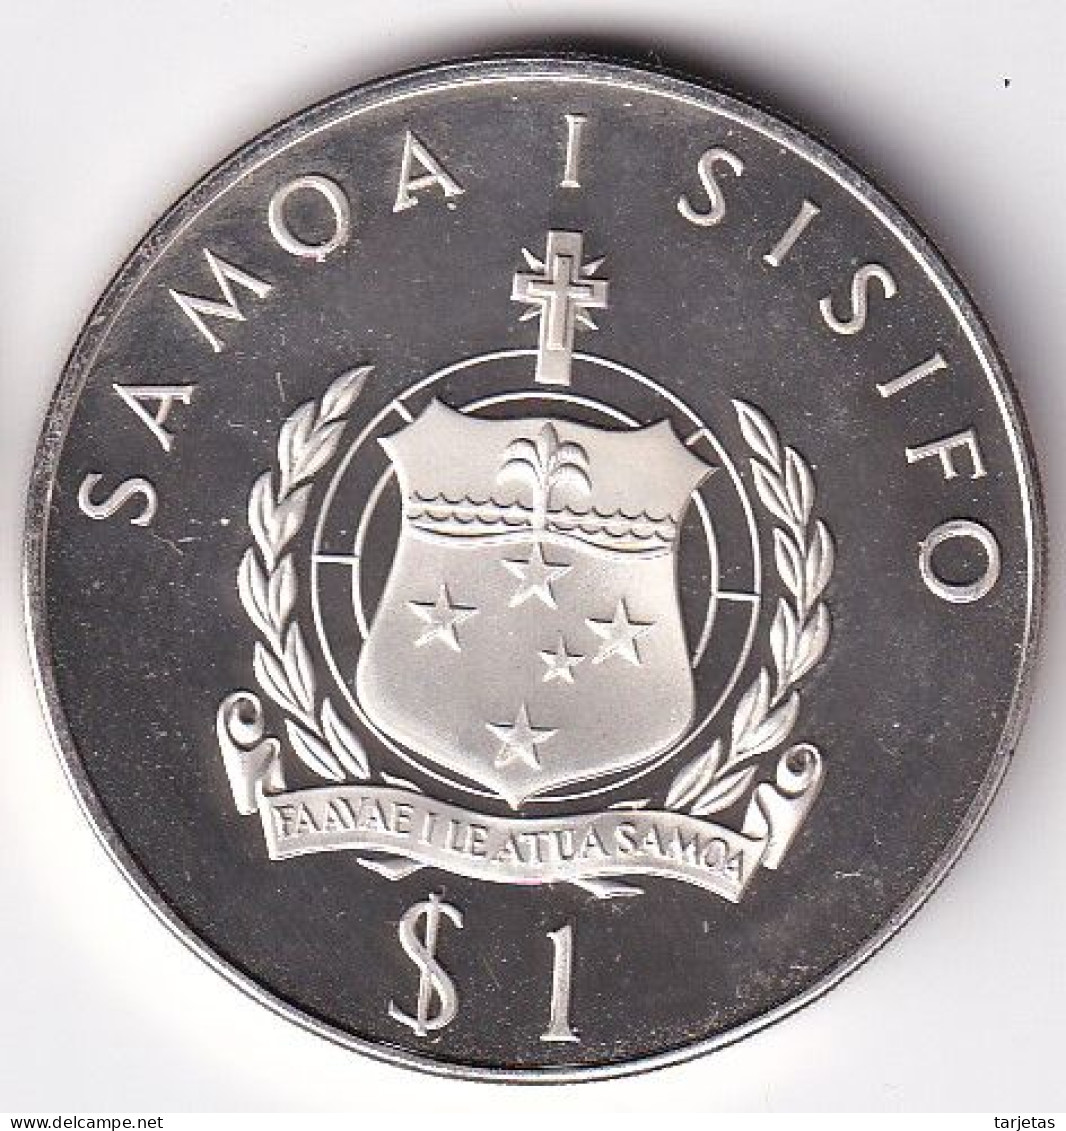 MONEDA DE PLATA  DE SAMOA DE 1 TALA DEL AÑO 1976 (COIN) SILVER-ARGENT - Samoa